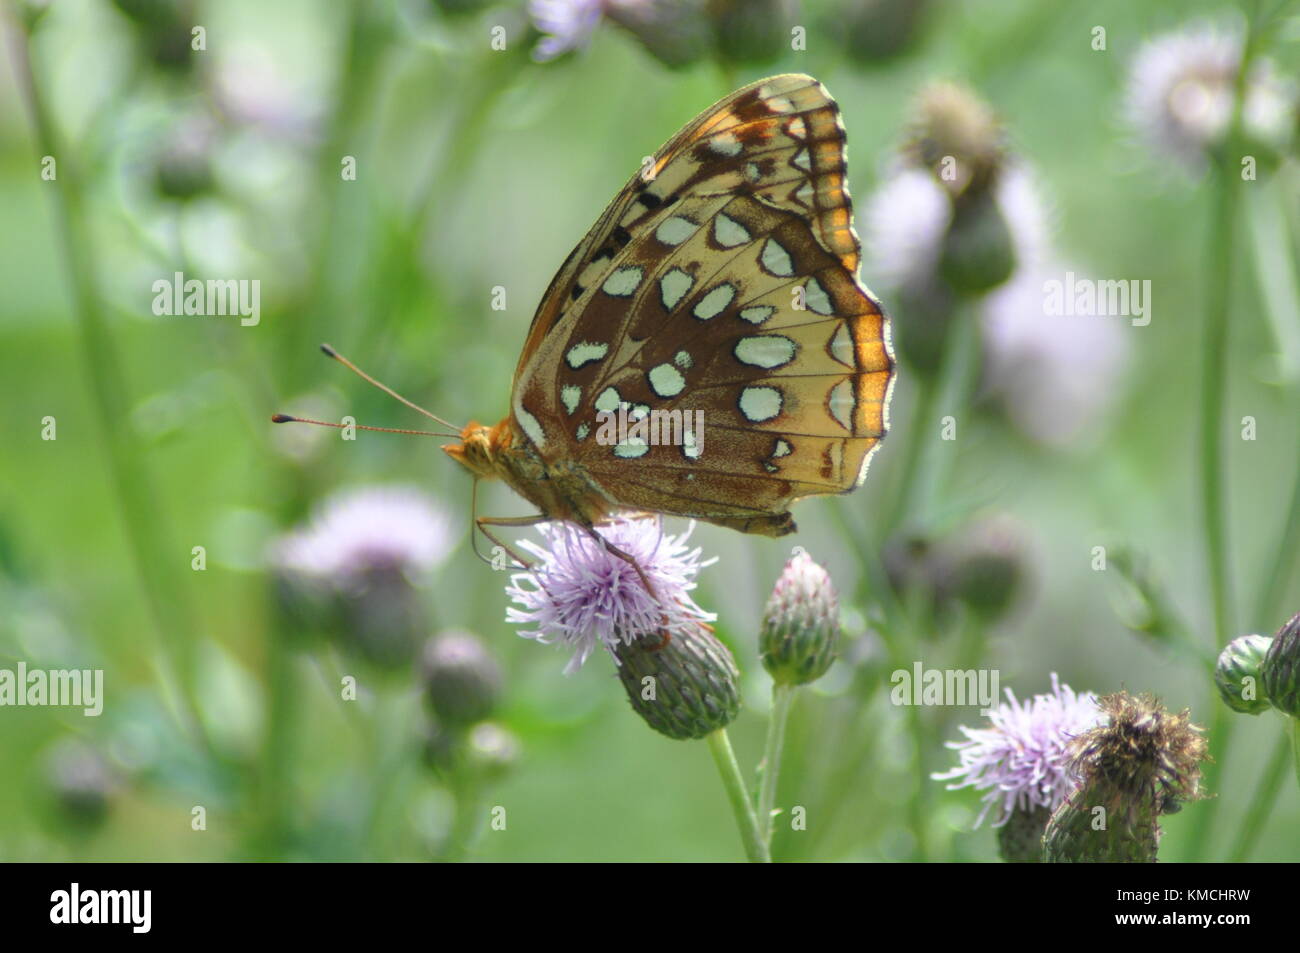 Butterfly Feeding on Flower Stock Photo